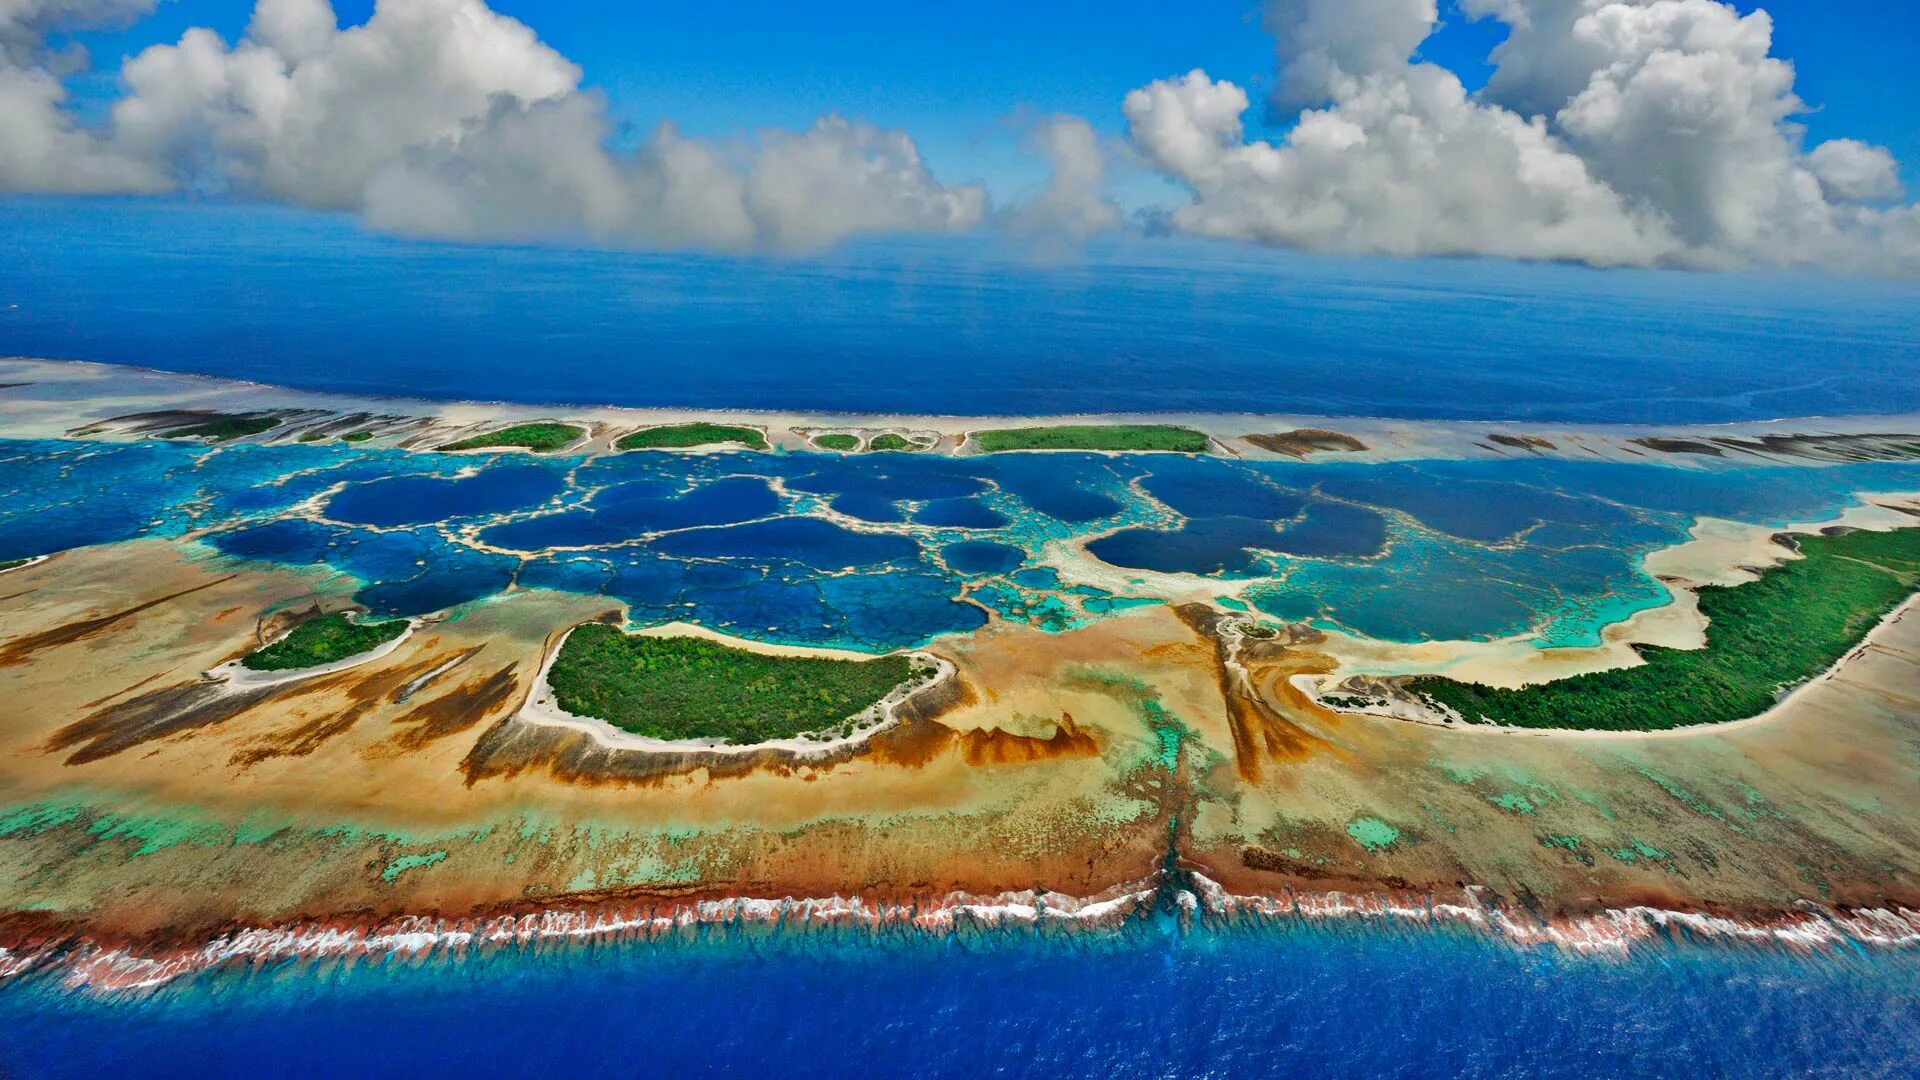 Атолл в тихом океане. Атолл Кирибати. Остров Каролайн, Кирибати. Тарава Кирибати. Каролайн Атолл.